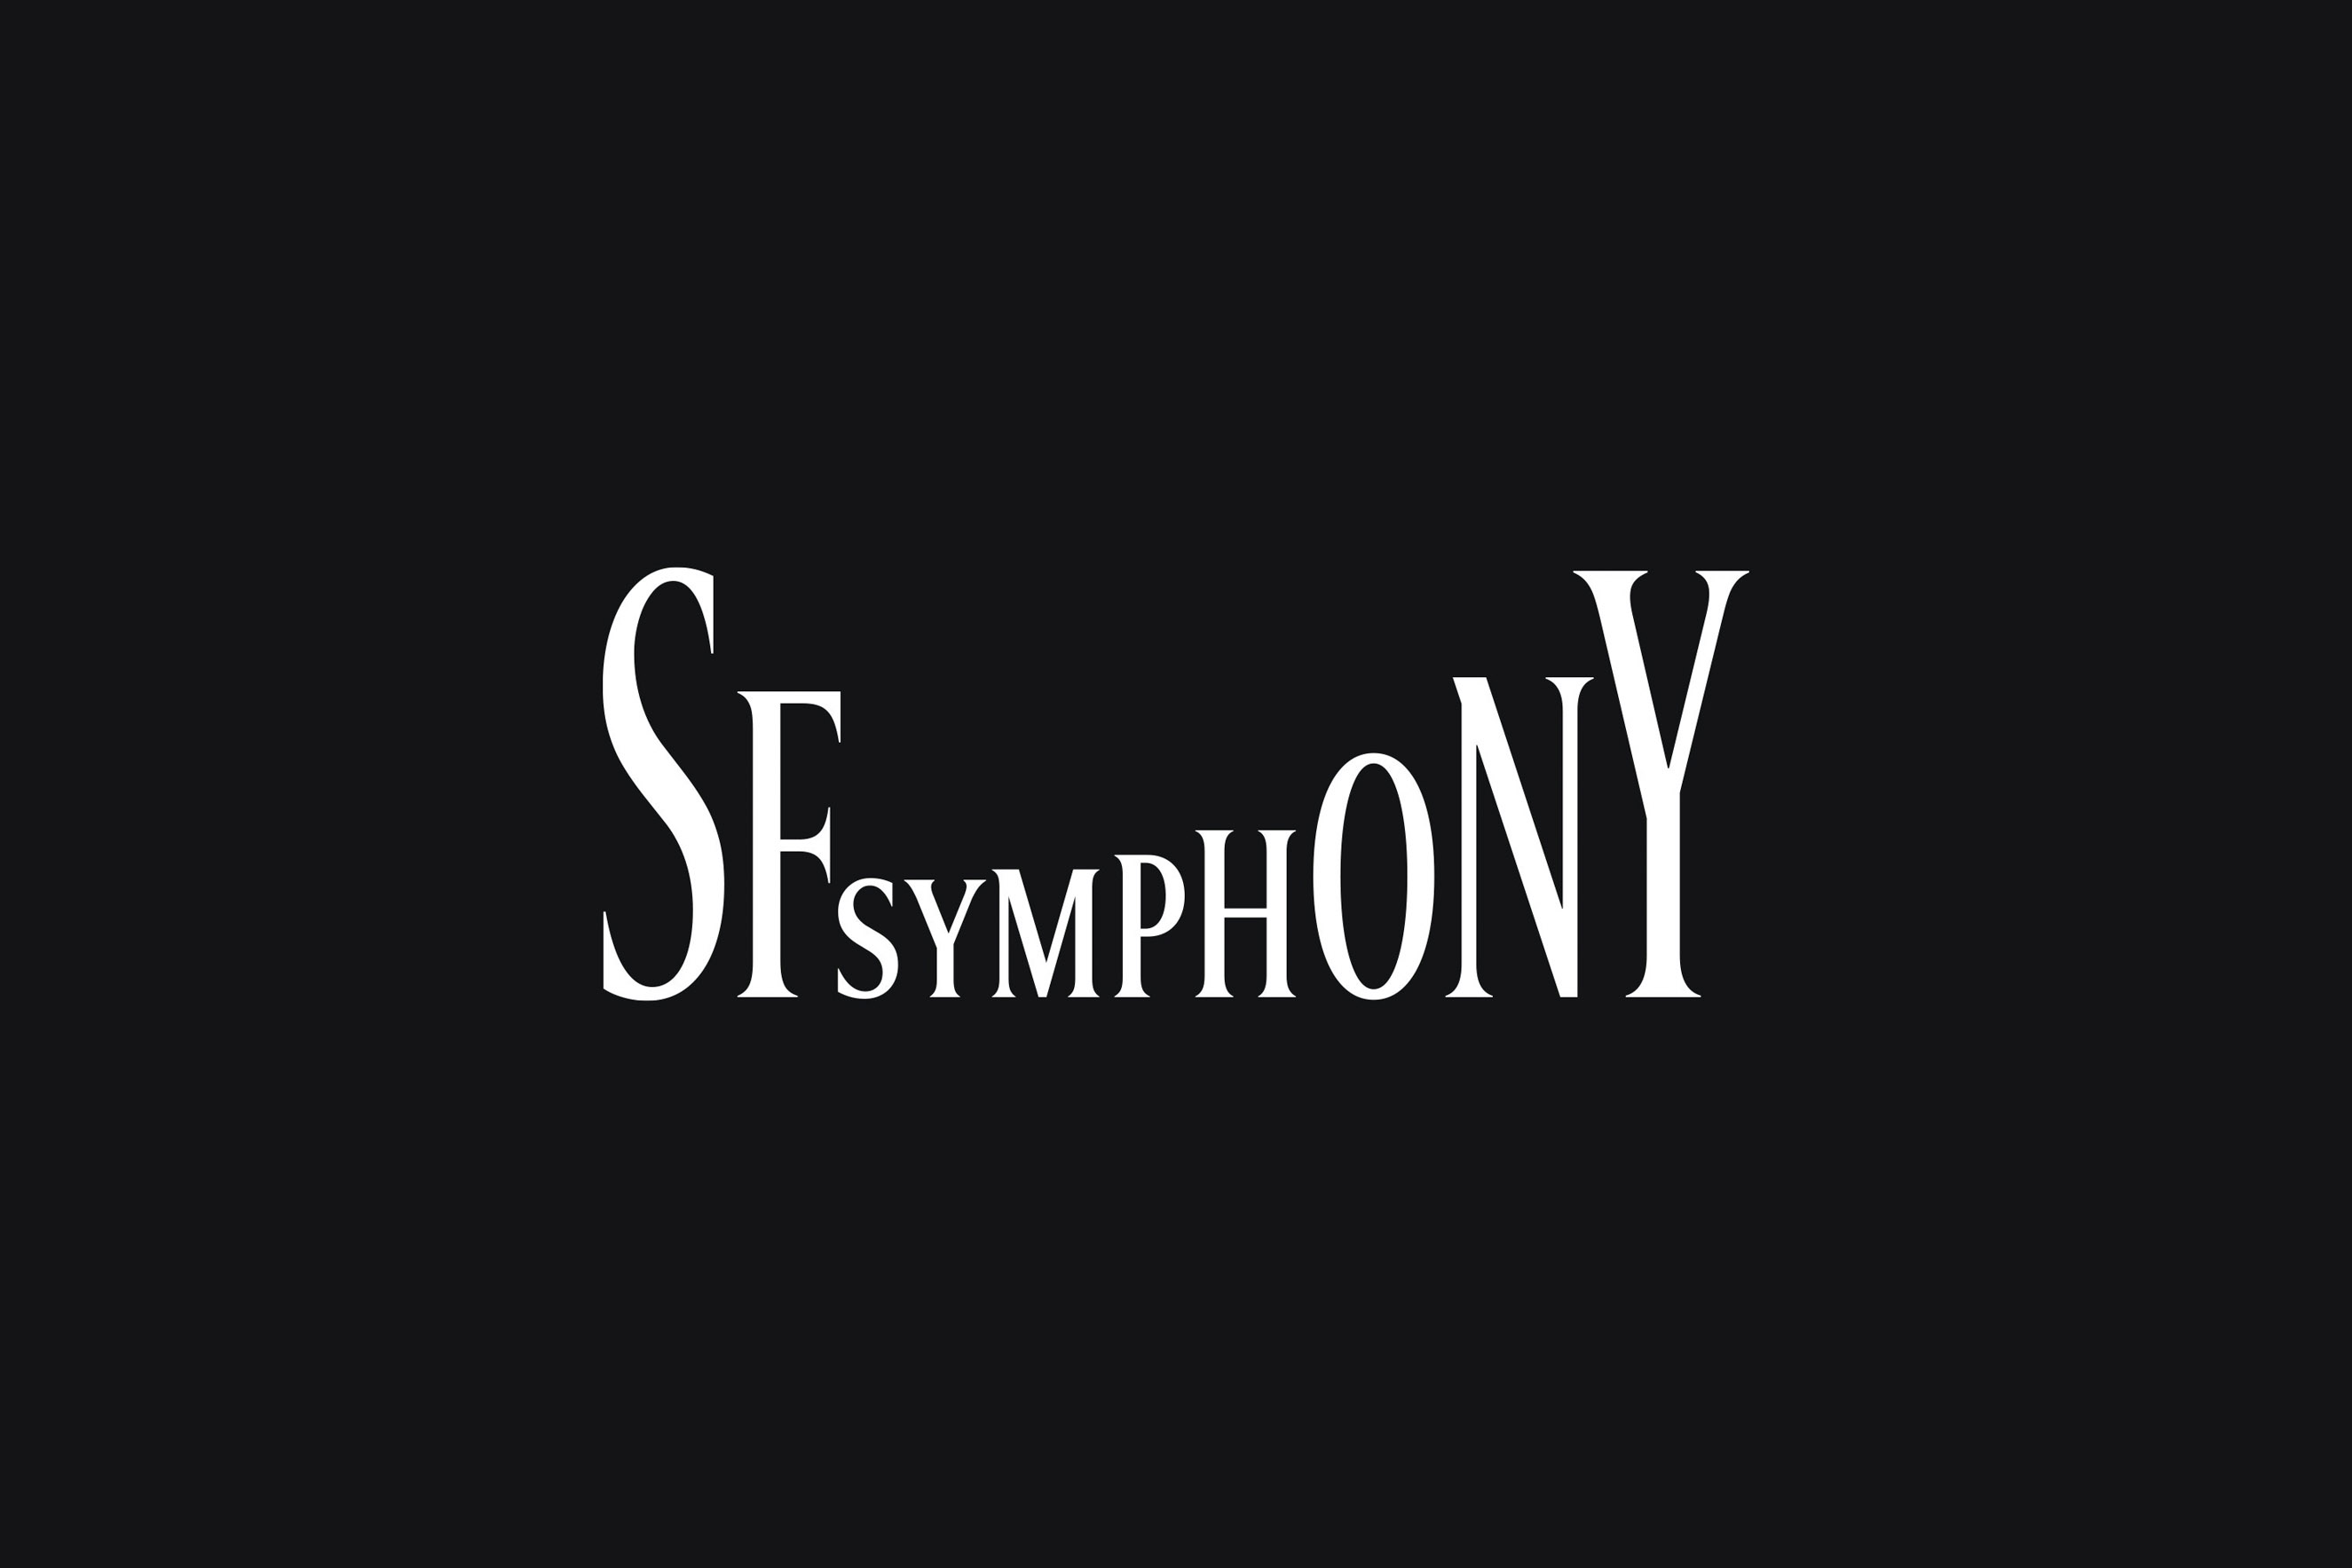 San Francisco Symphony Dynamic Logotype